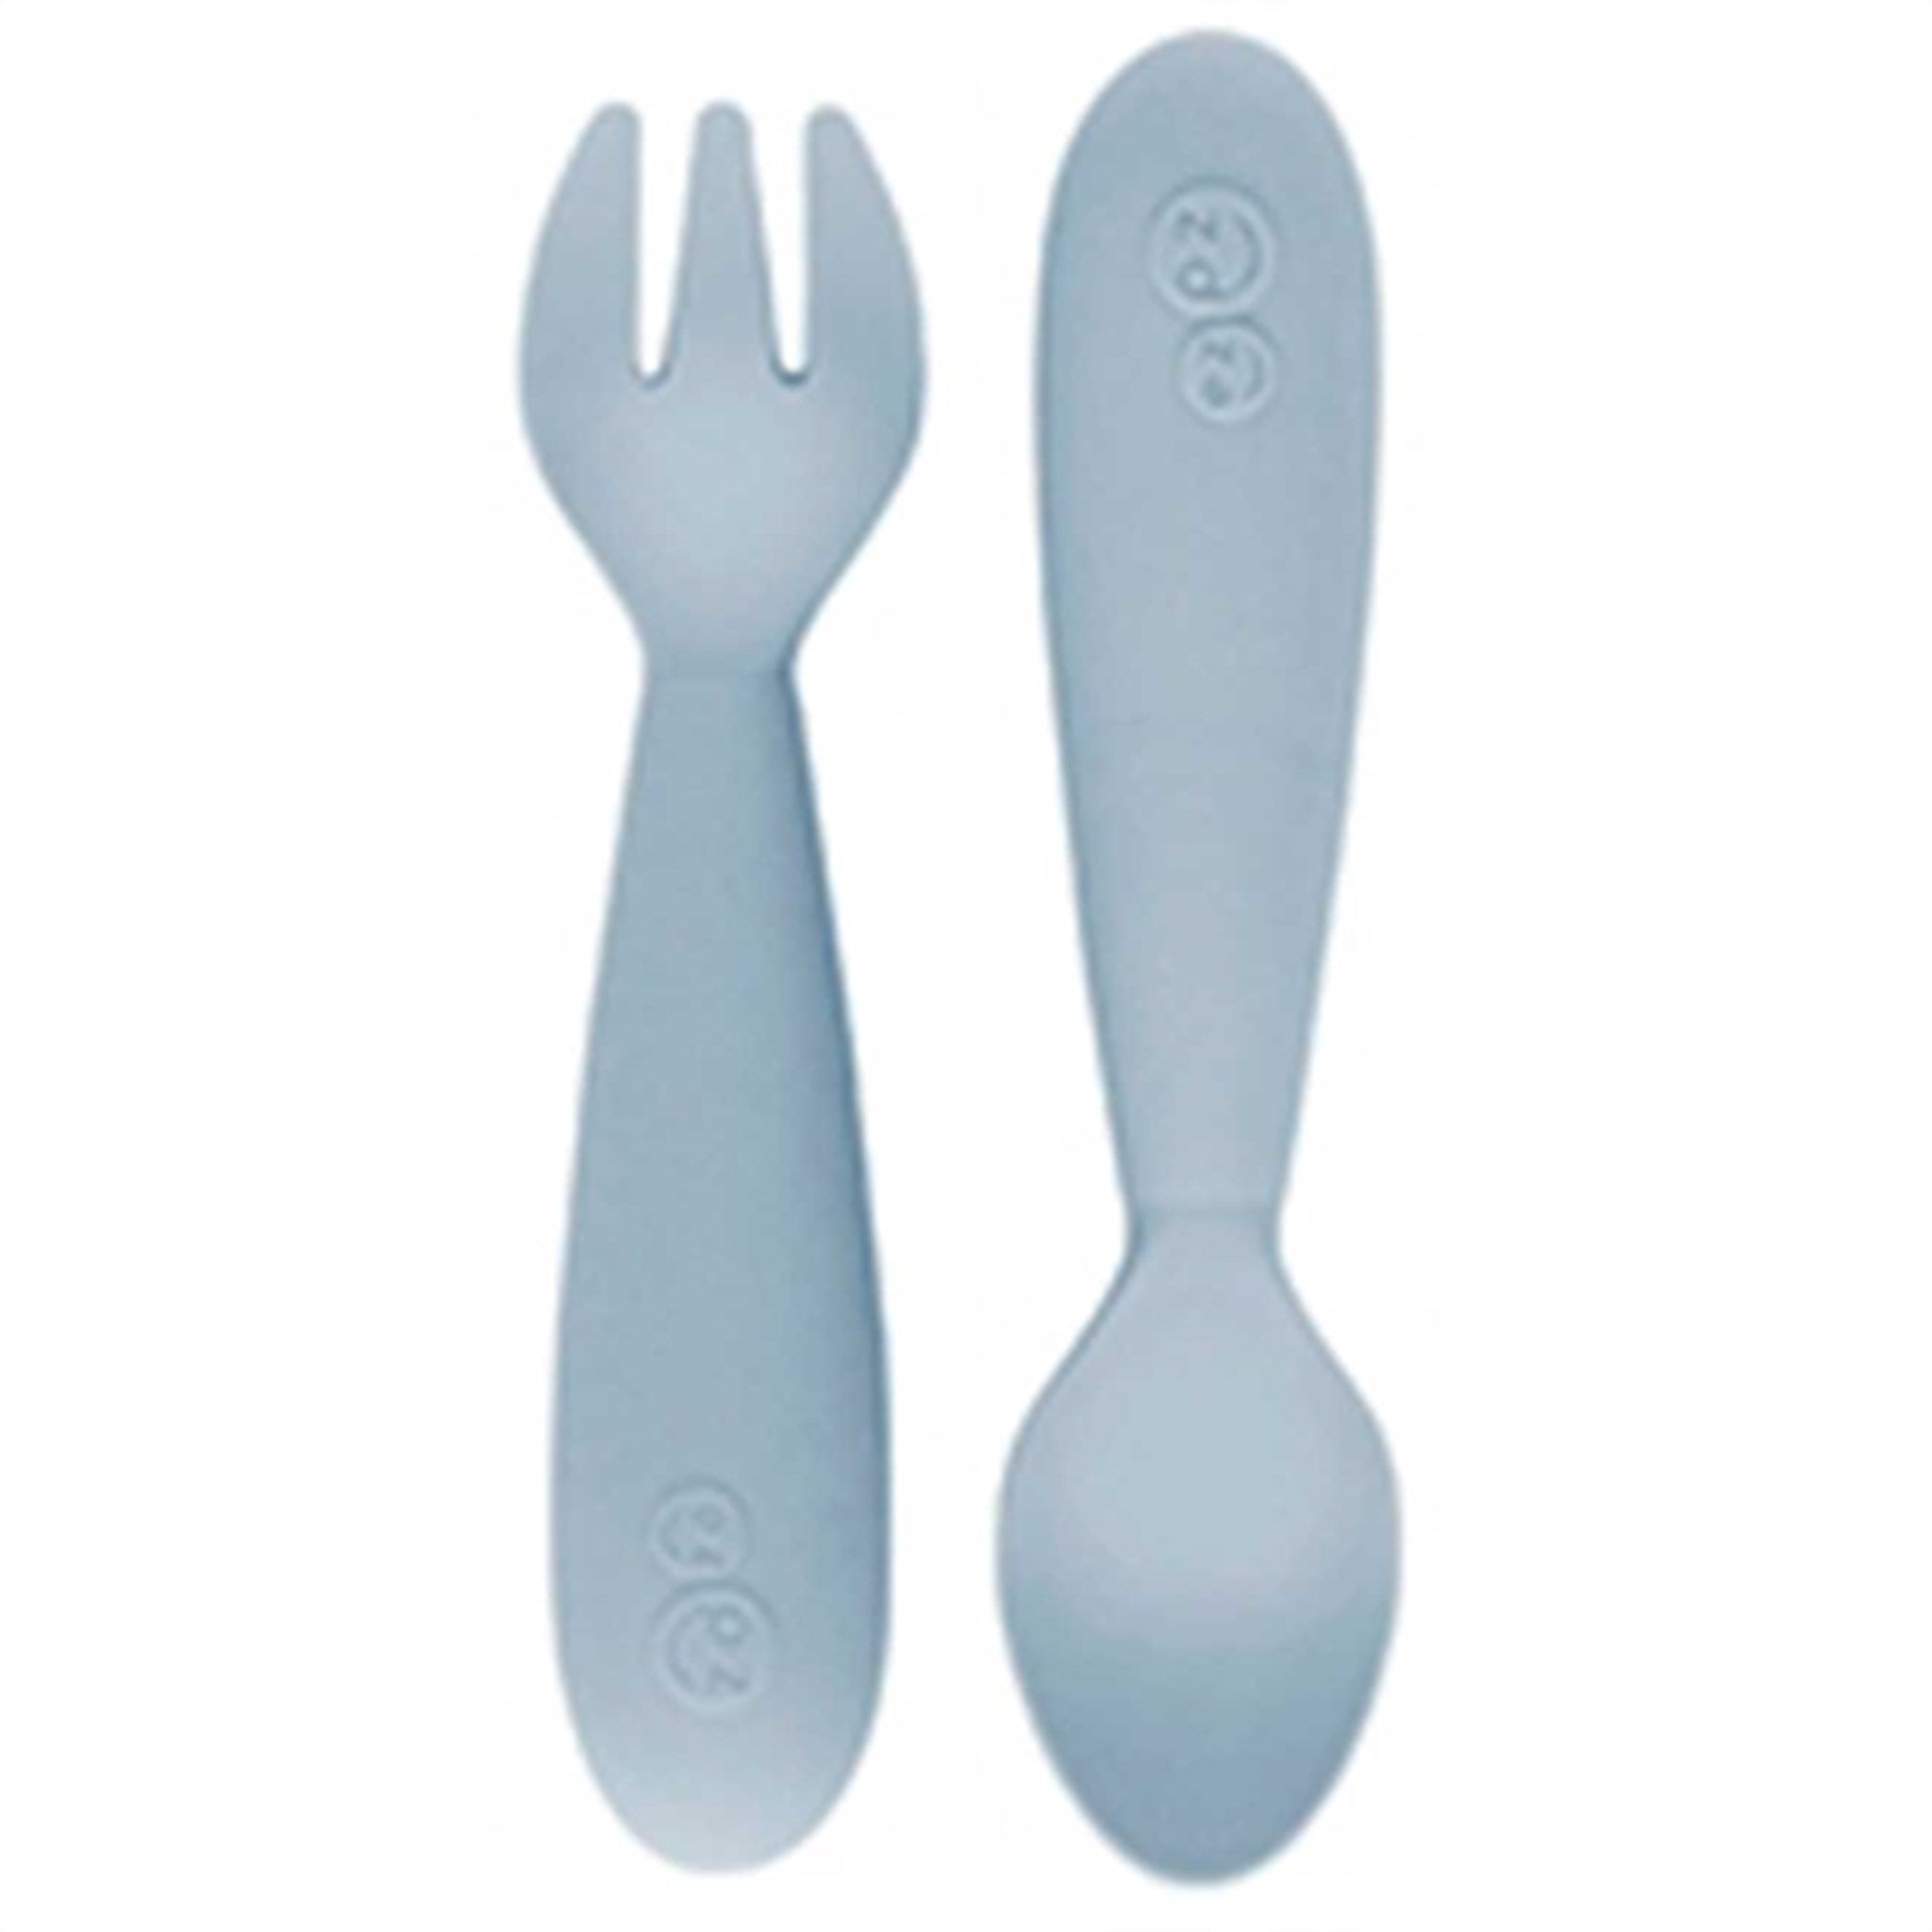 Ezpz Mini Cutlery Set Gray Blue